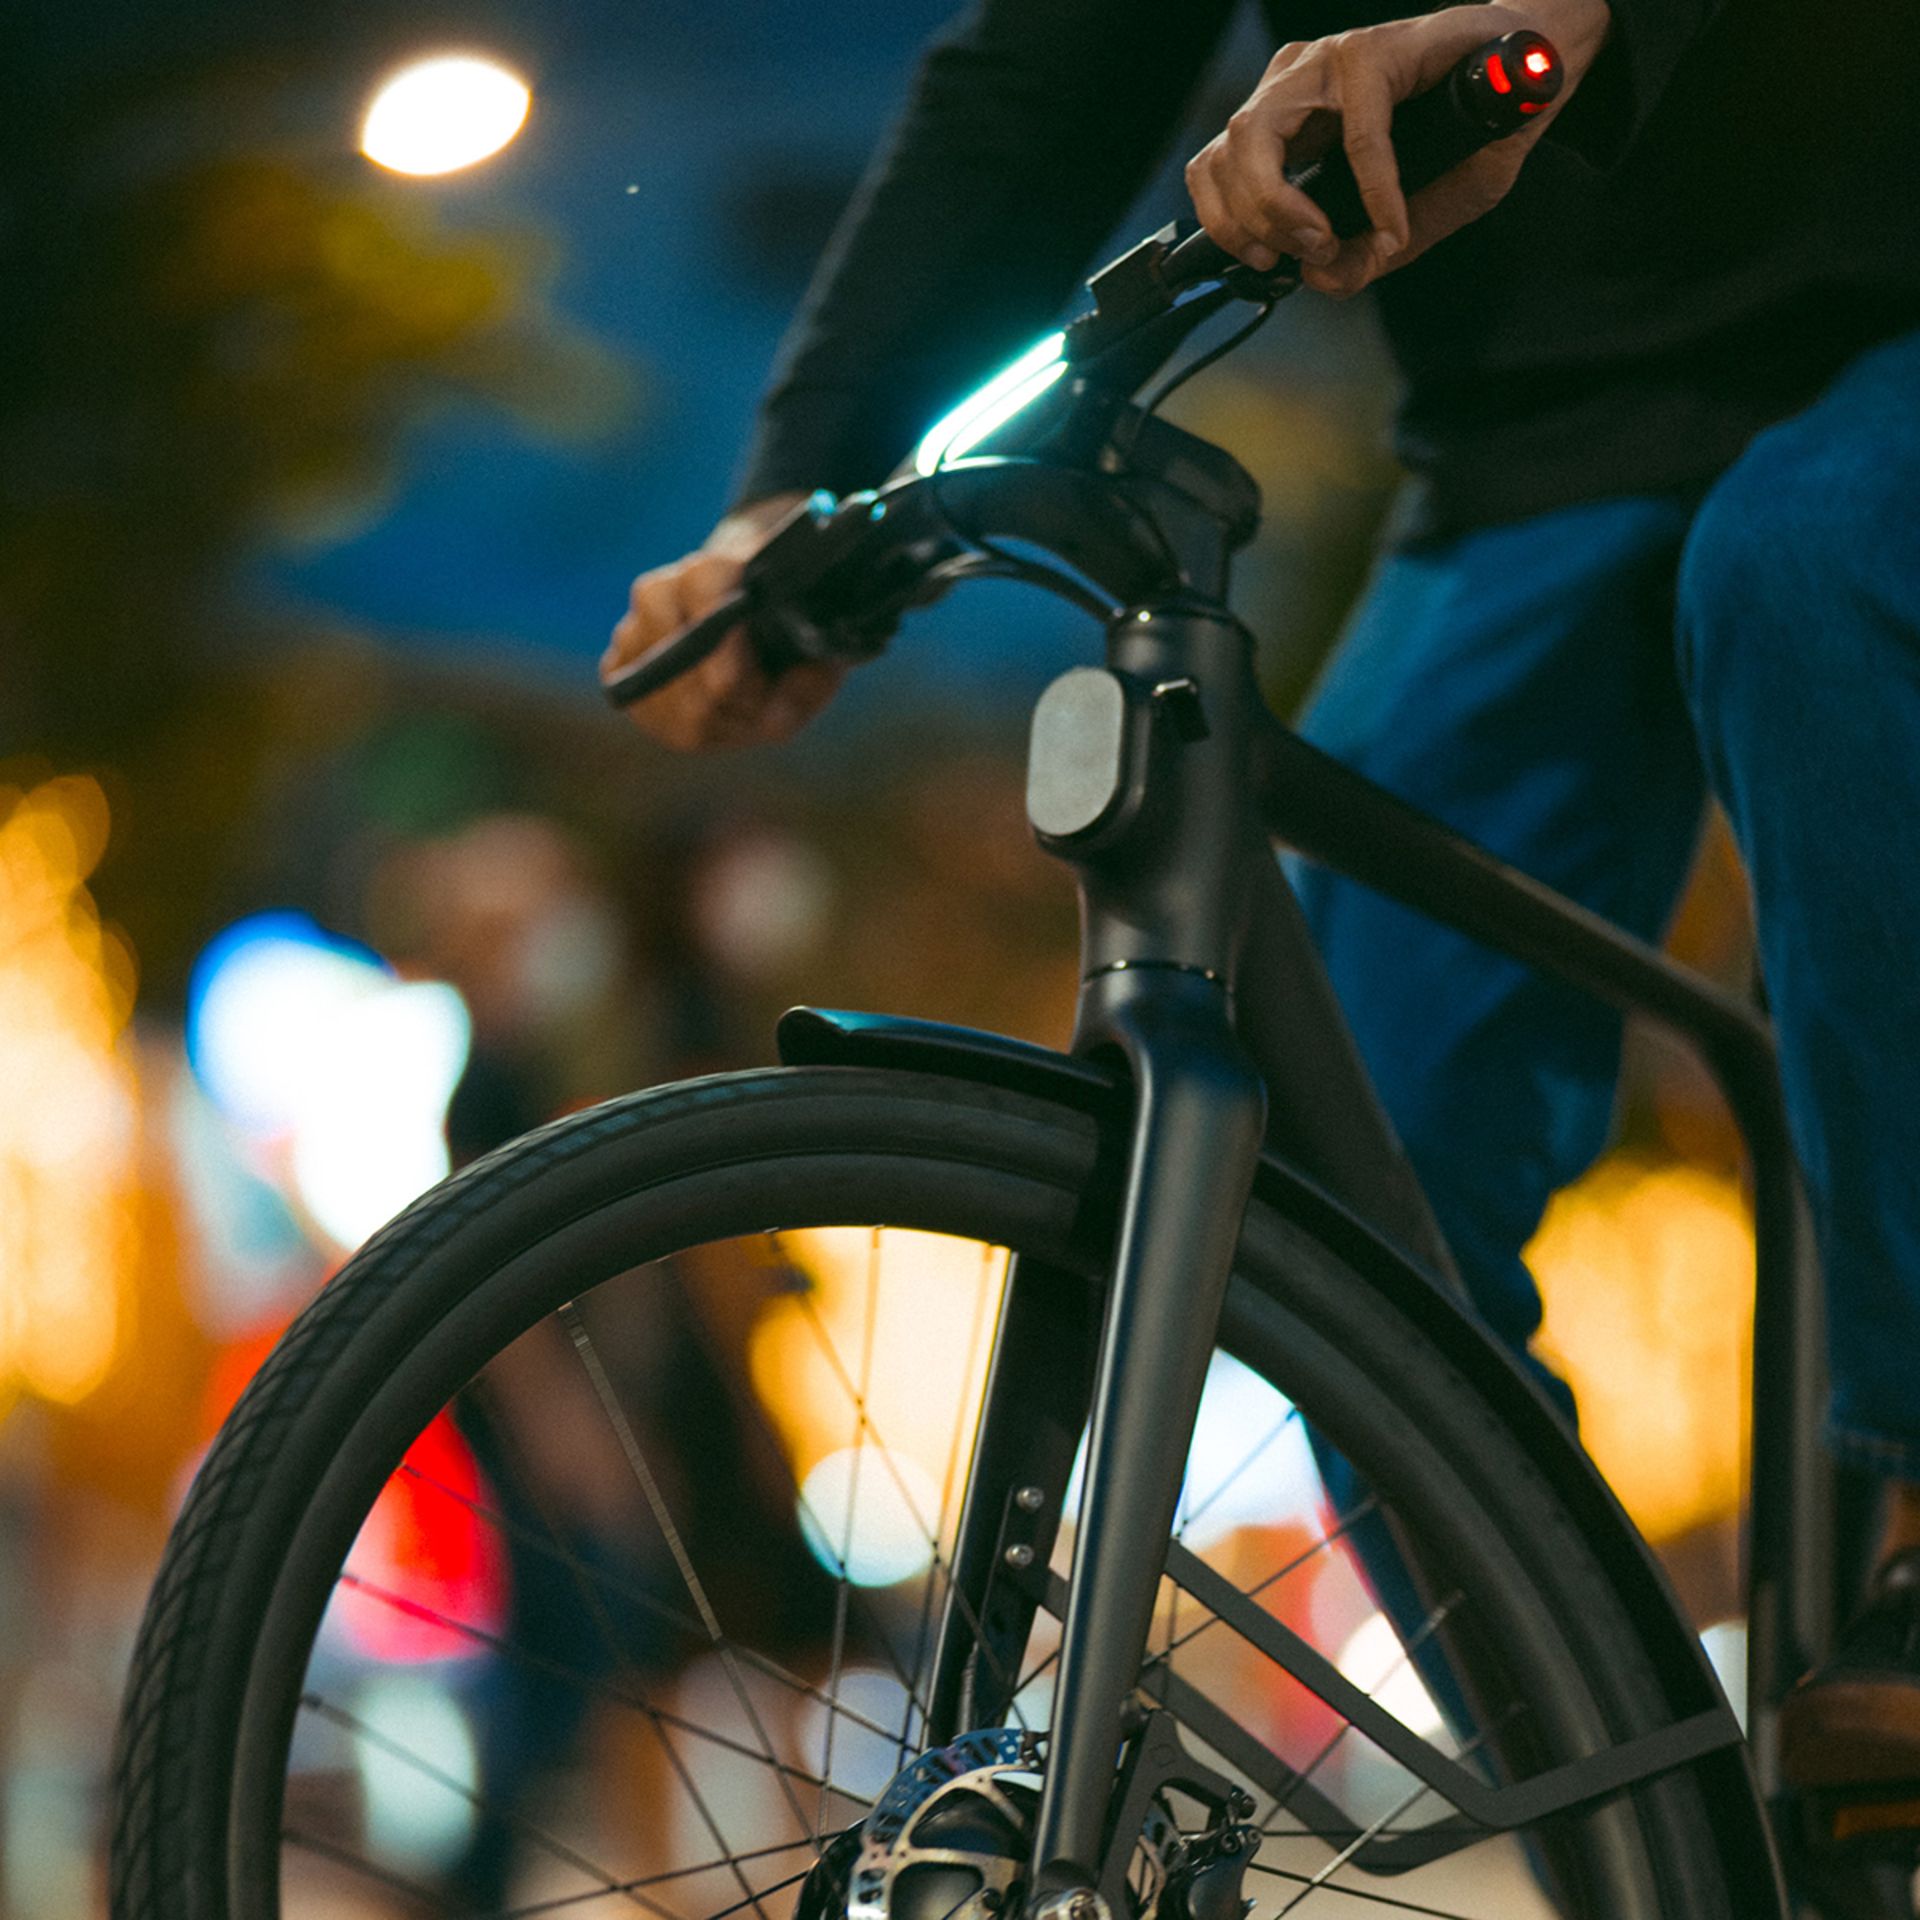 Modmo Saigon+ Electric Bicycle - RRP £2800 - Size M (Rider: 155-175cm) - Image 11 of 19